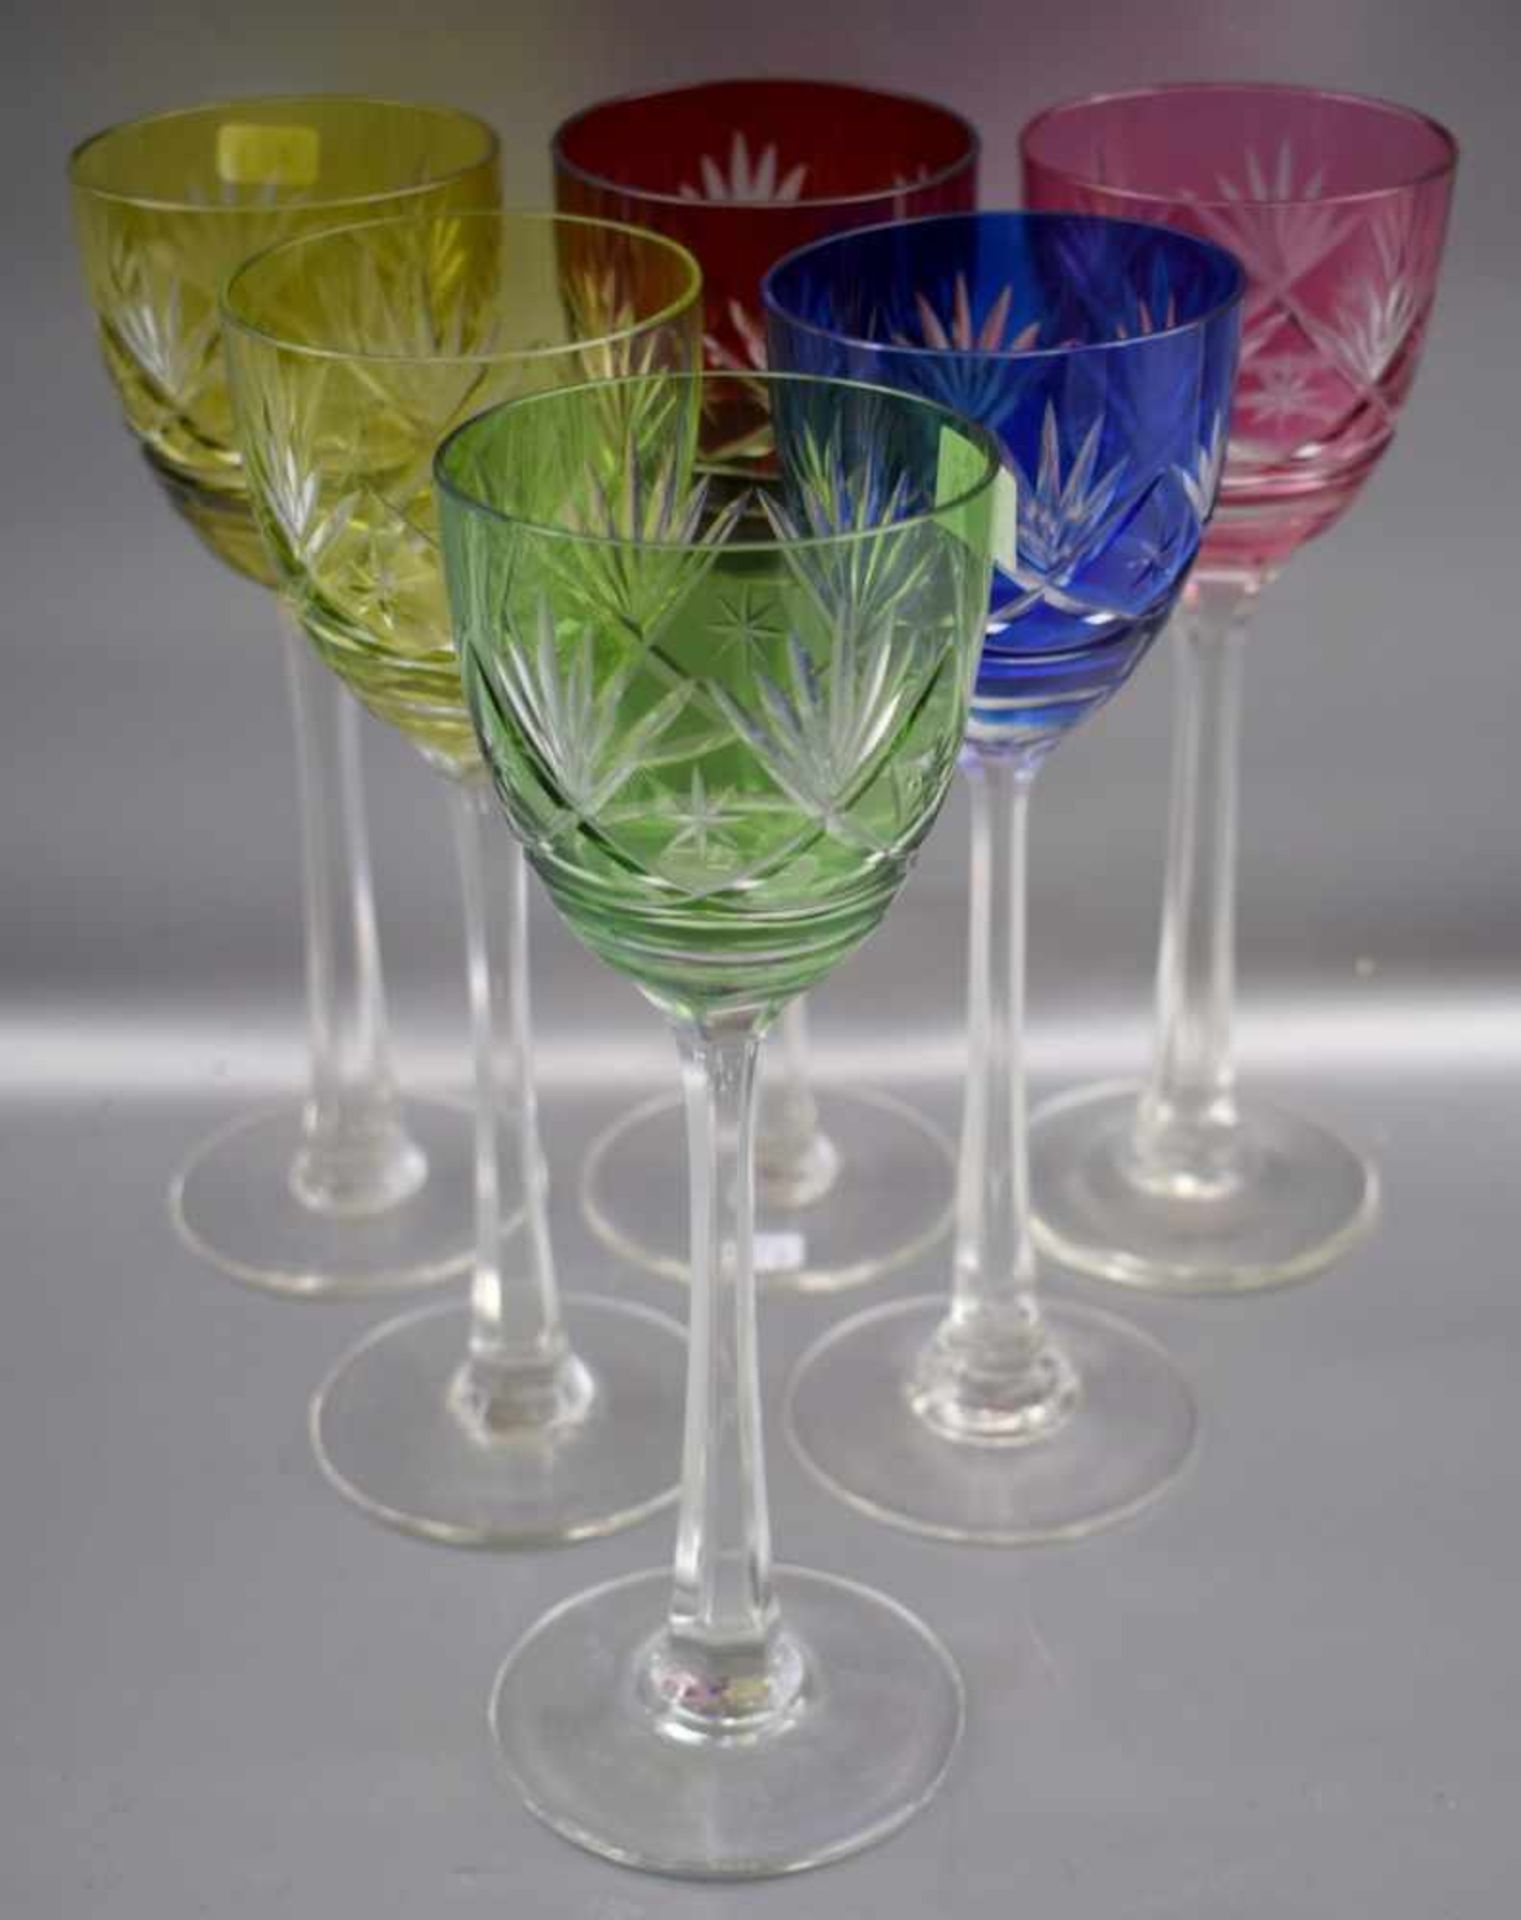 Sechs Weingläser farbl. Glas, geschliffen verziert, Kelch mit buntem Überfang, H 21 cm